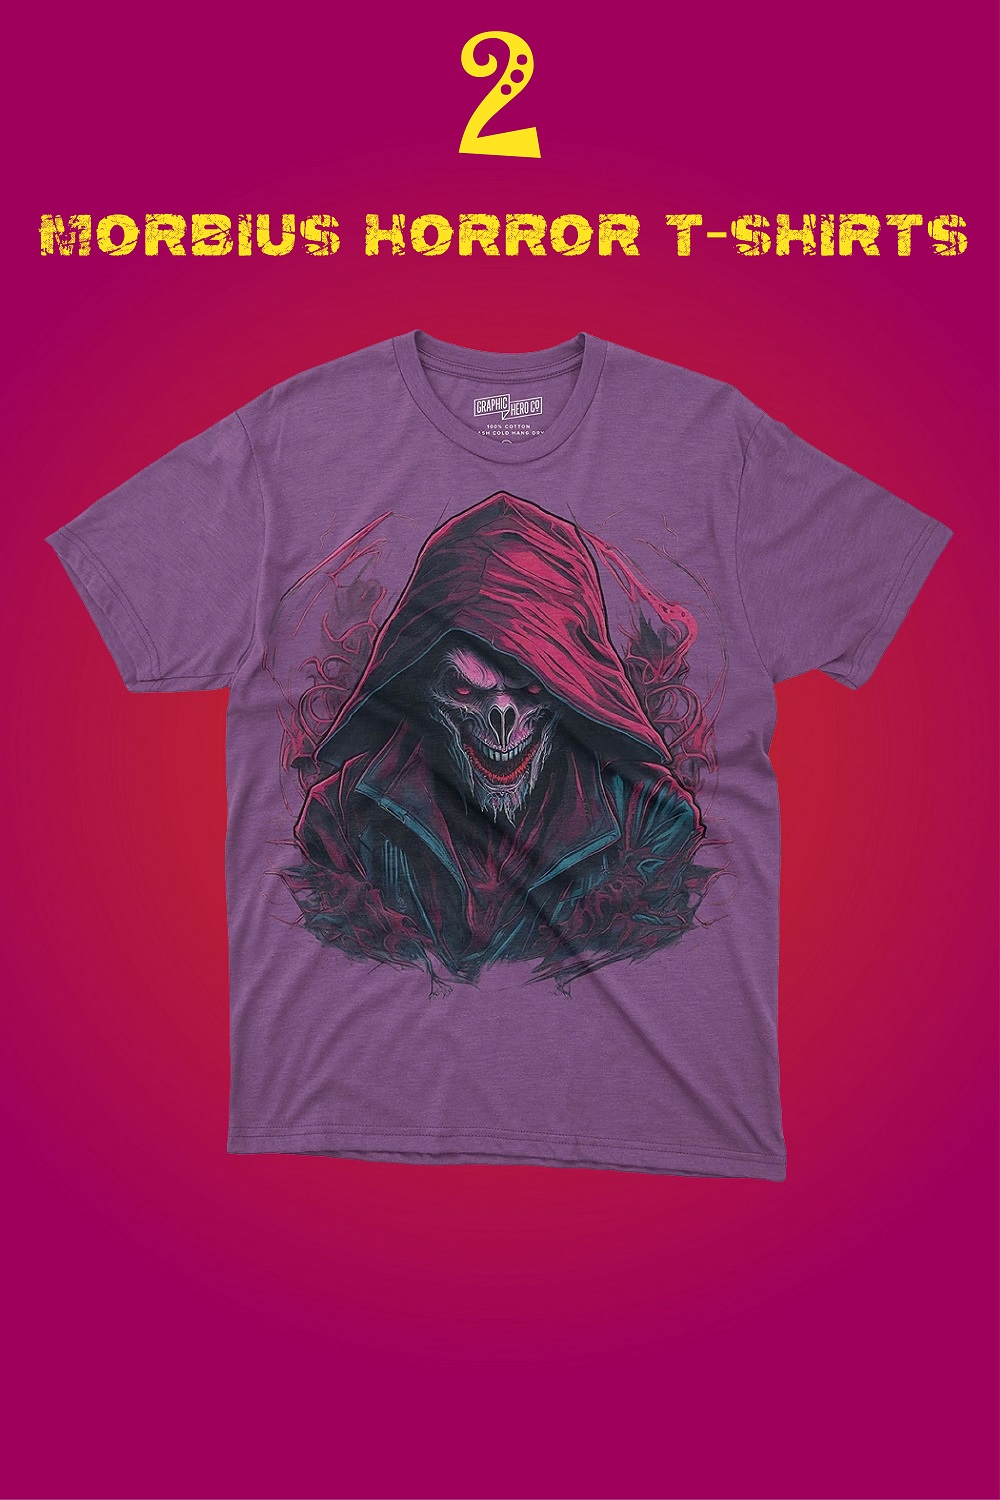 2 horror t-shirt designs morbius pinterest preview image.